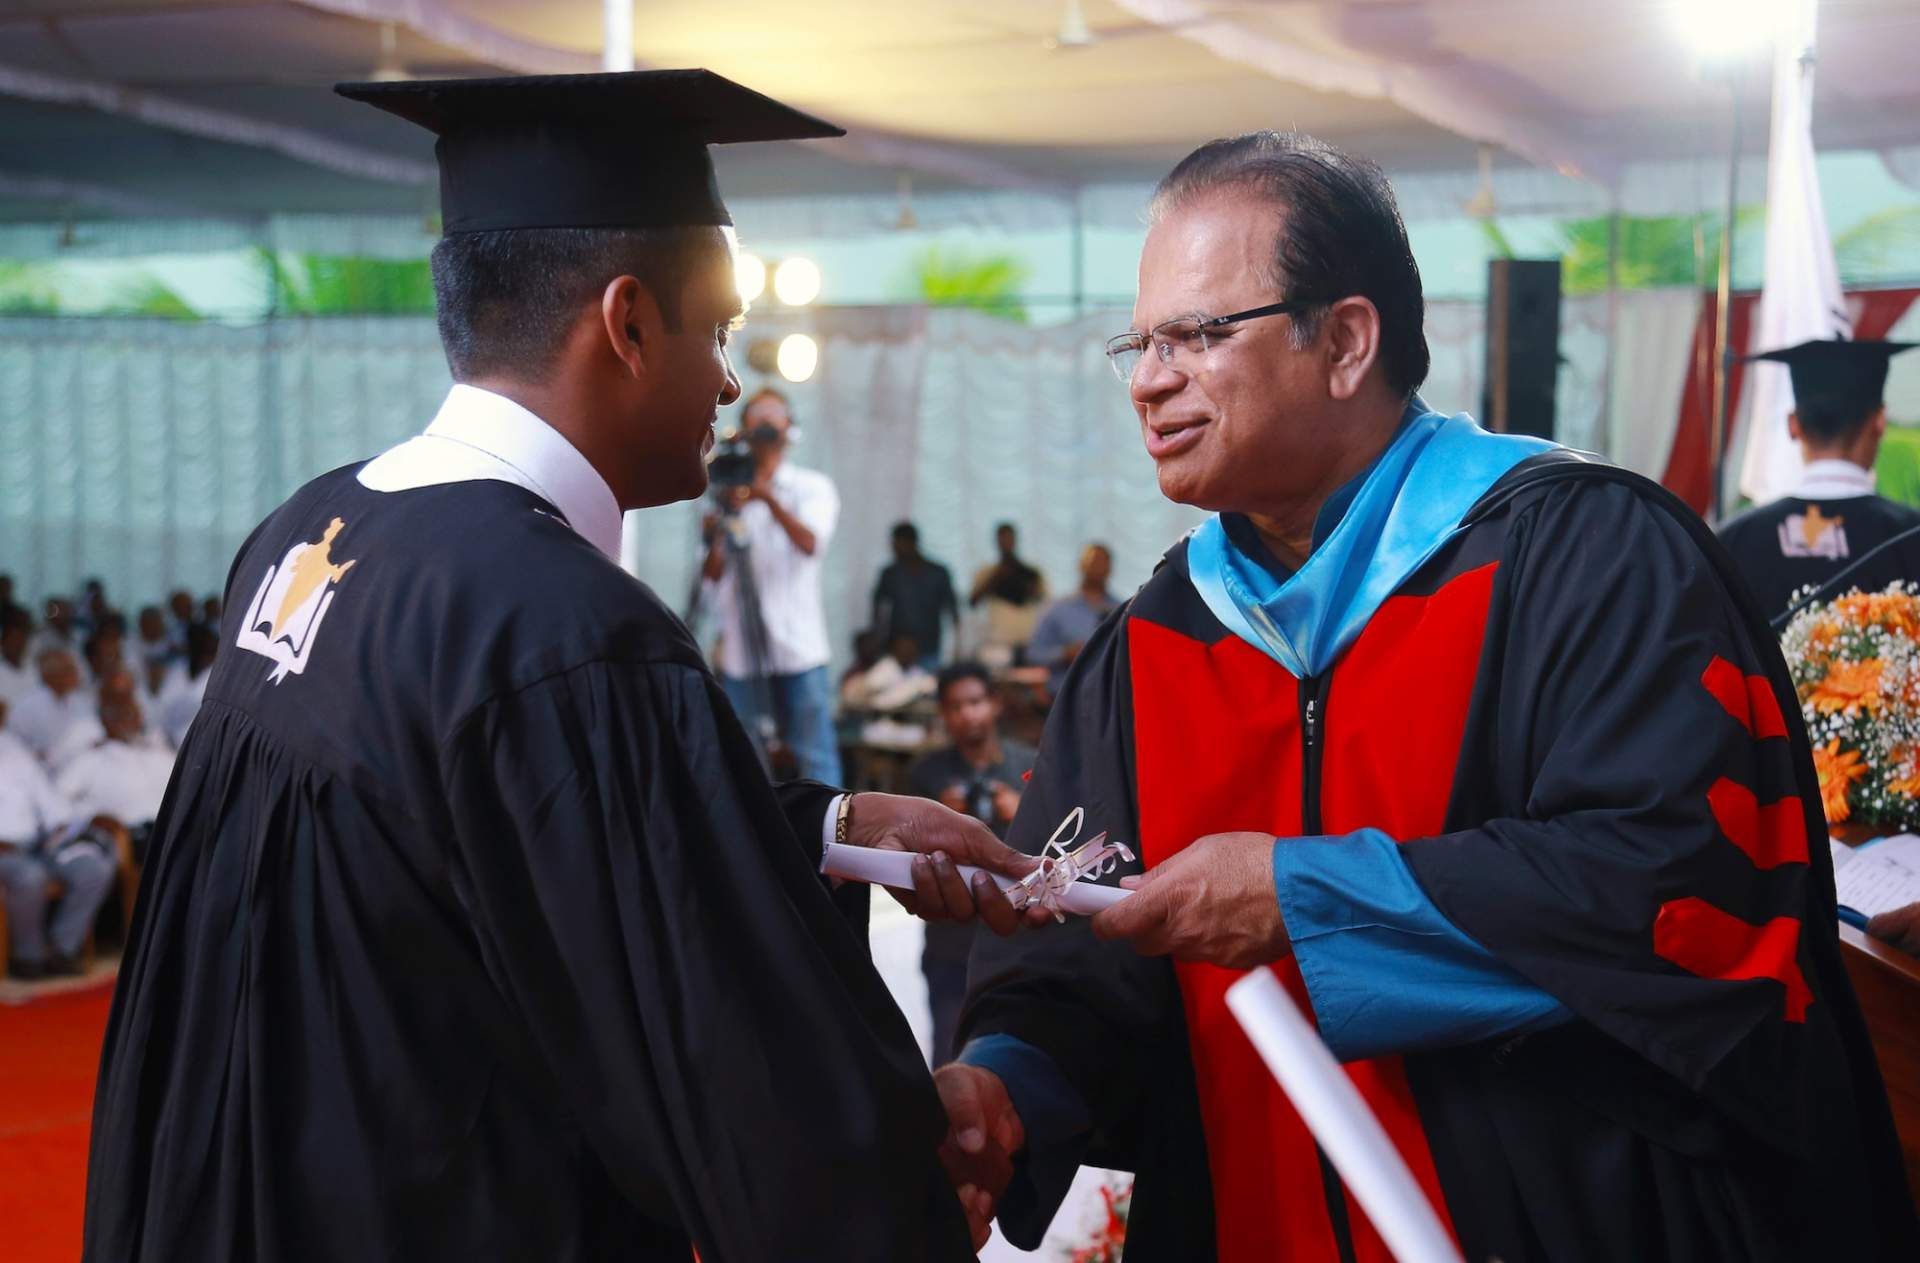 IGO President Valson Abraham presents a diploma to an IBC 2017 graduate.